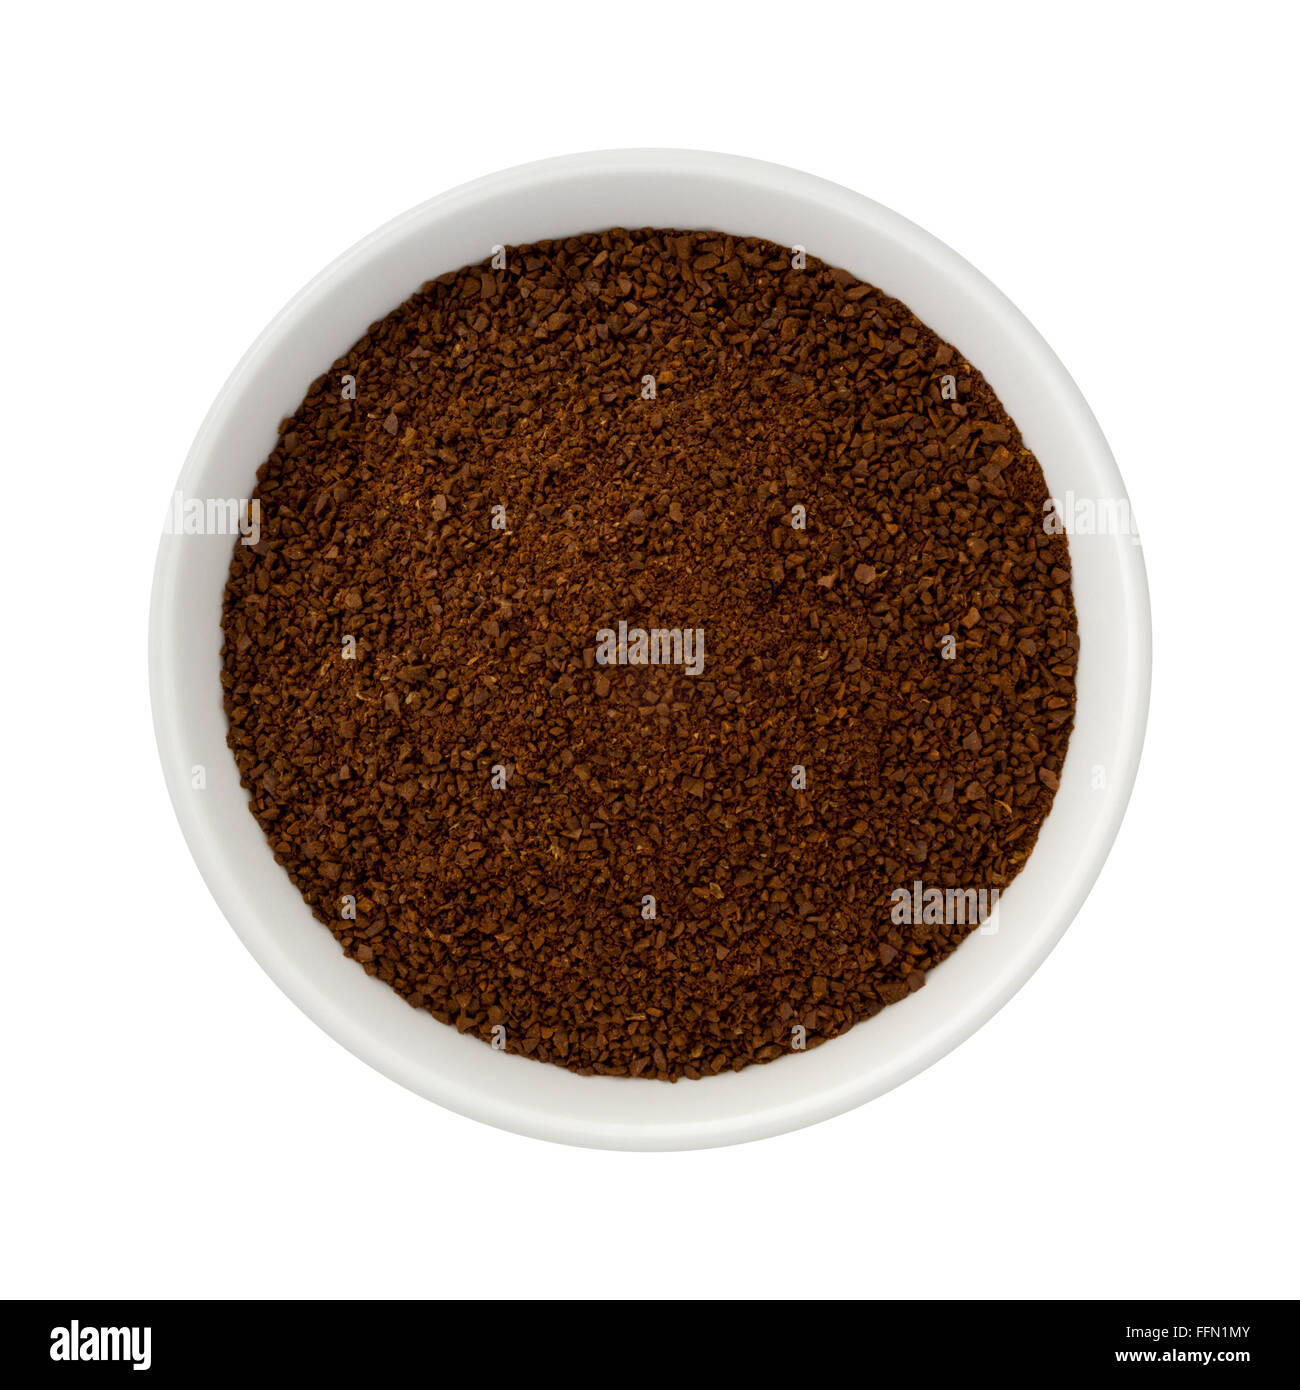 Pilon Coffee, Instant, Gourmet, Decaffeinated, Packets, Ground